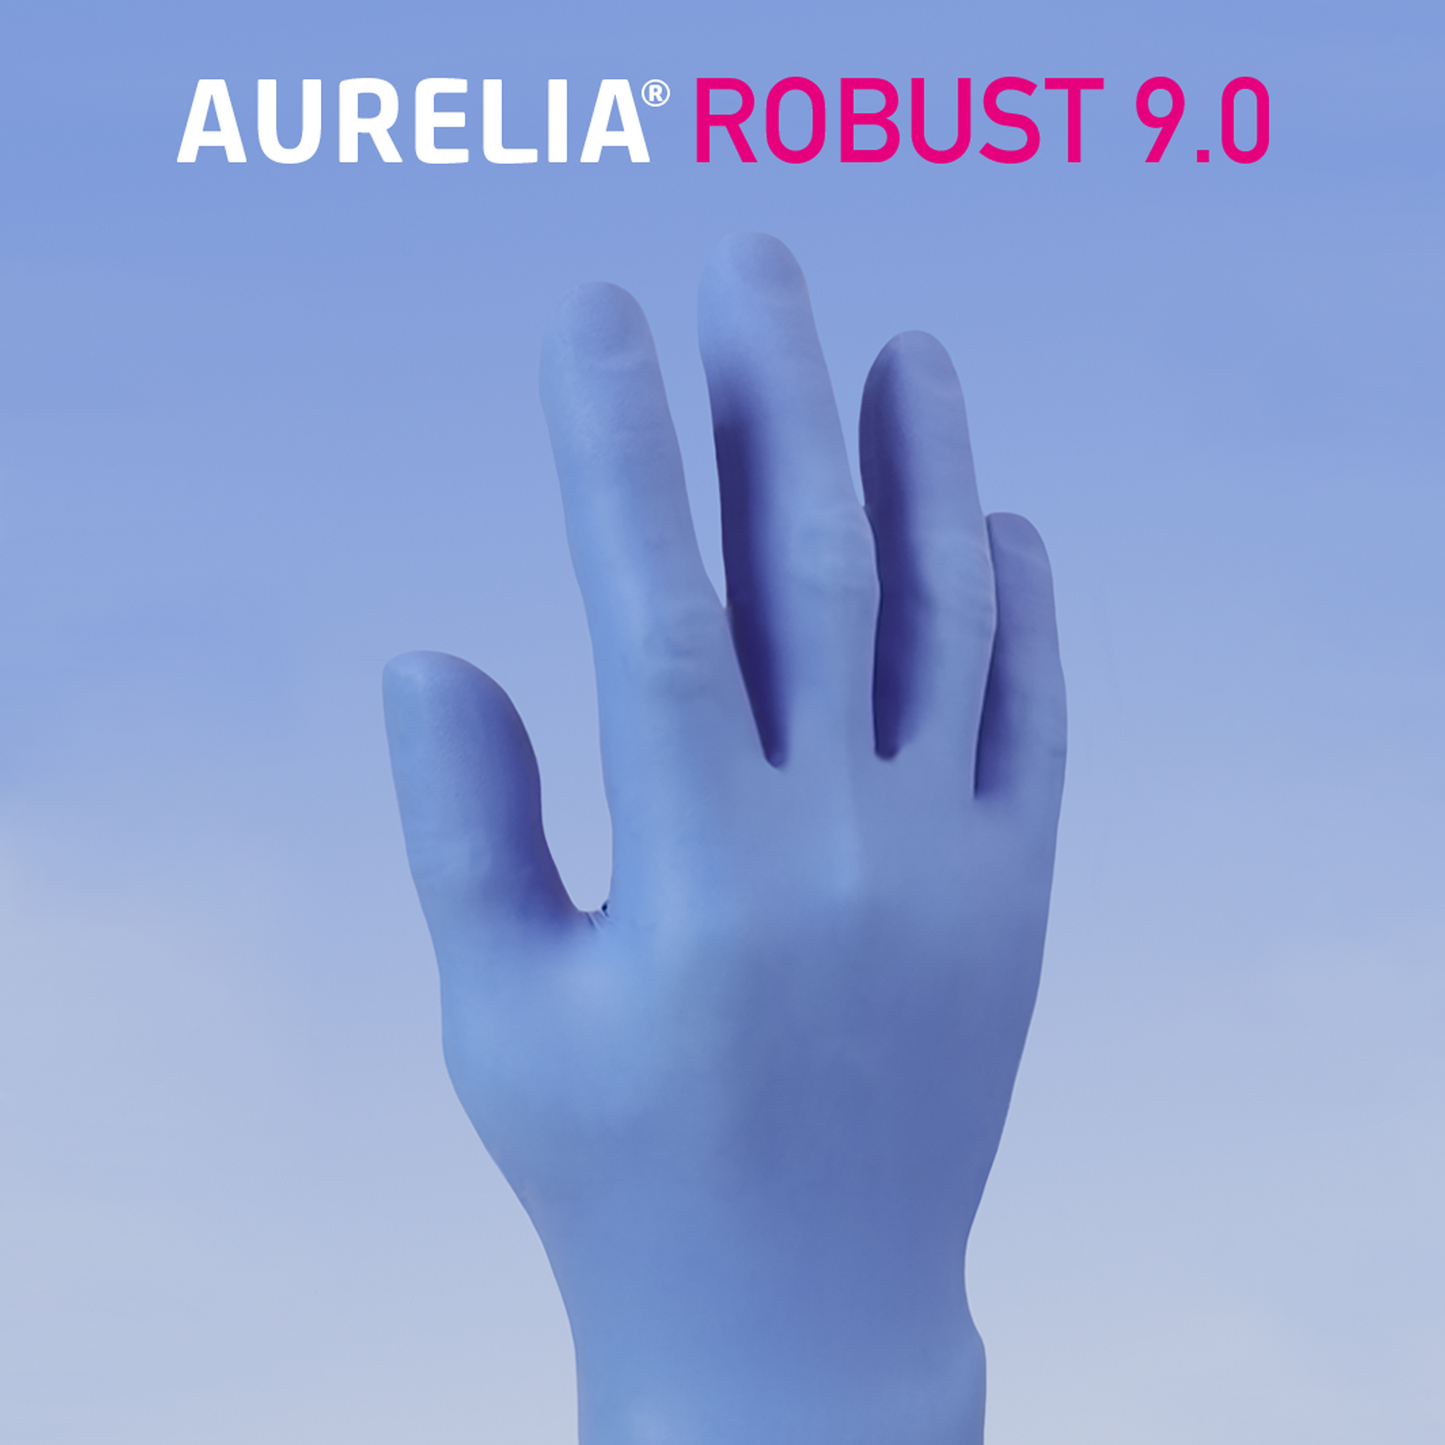 Aurelia® Robust 9.0 Nitrile Examination Gloves